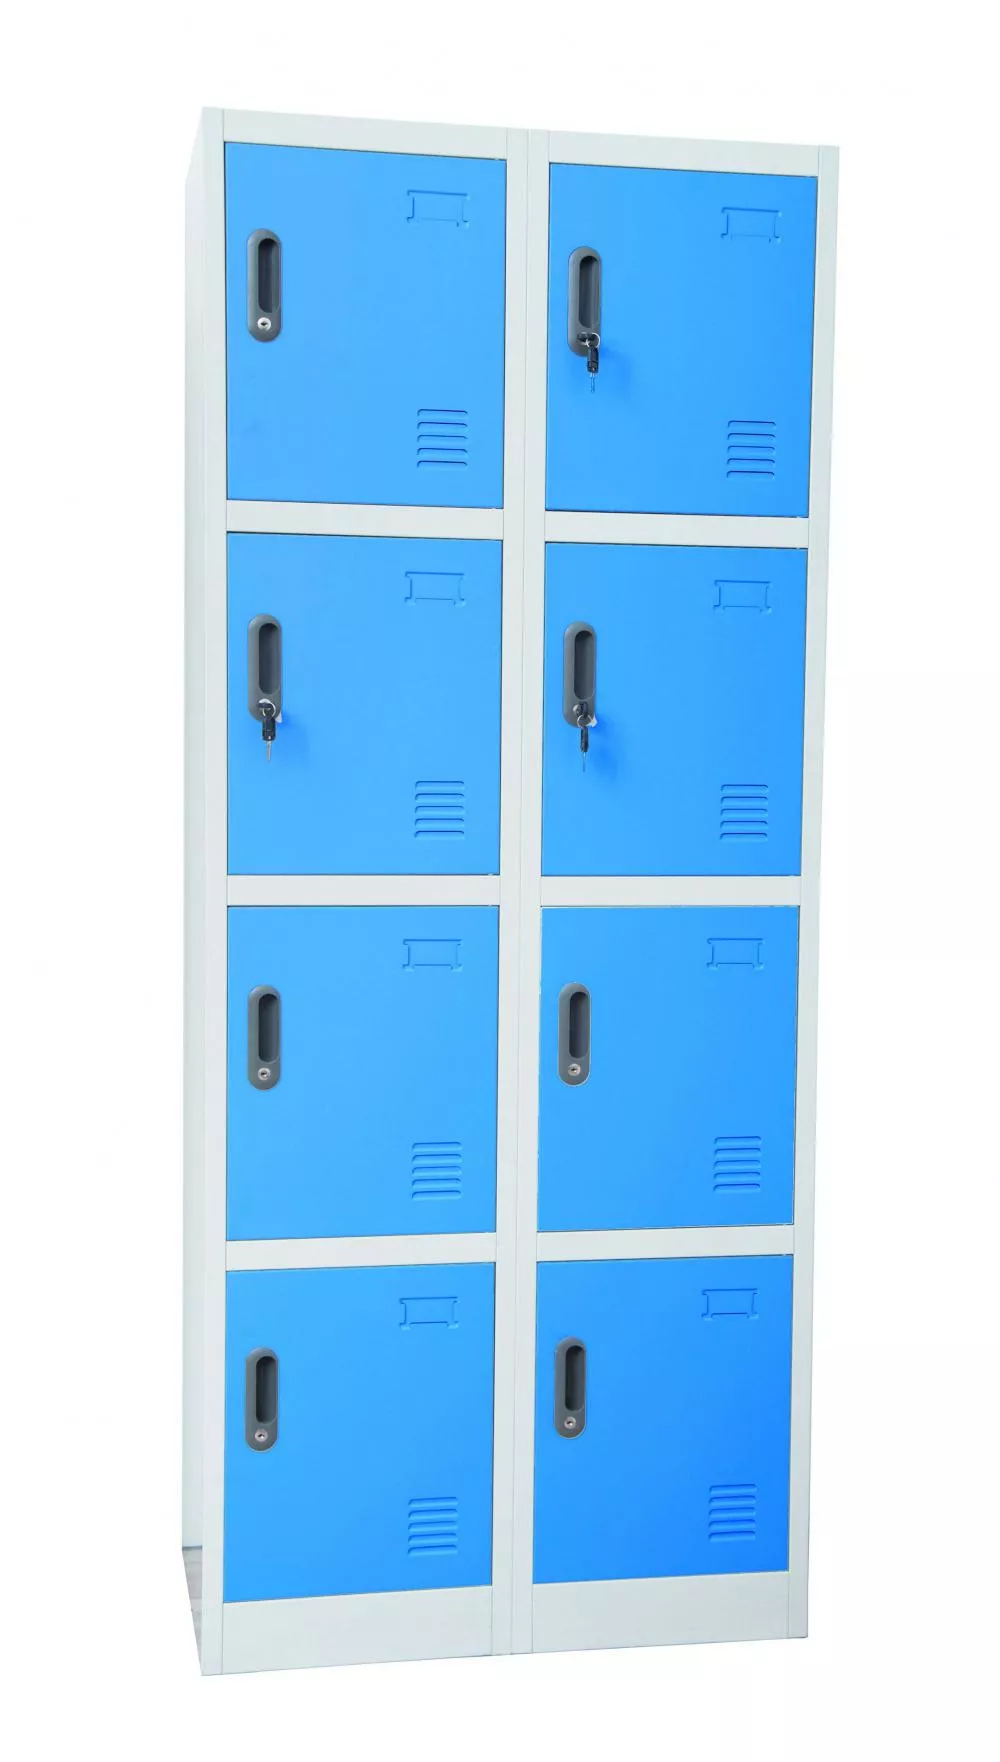 Vestiar metalic 8 compartimente albastru 76 x 45 x 182 cm